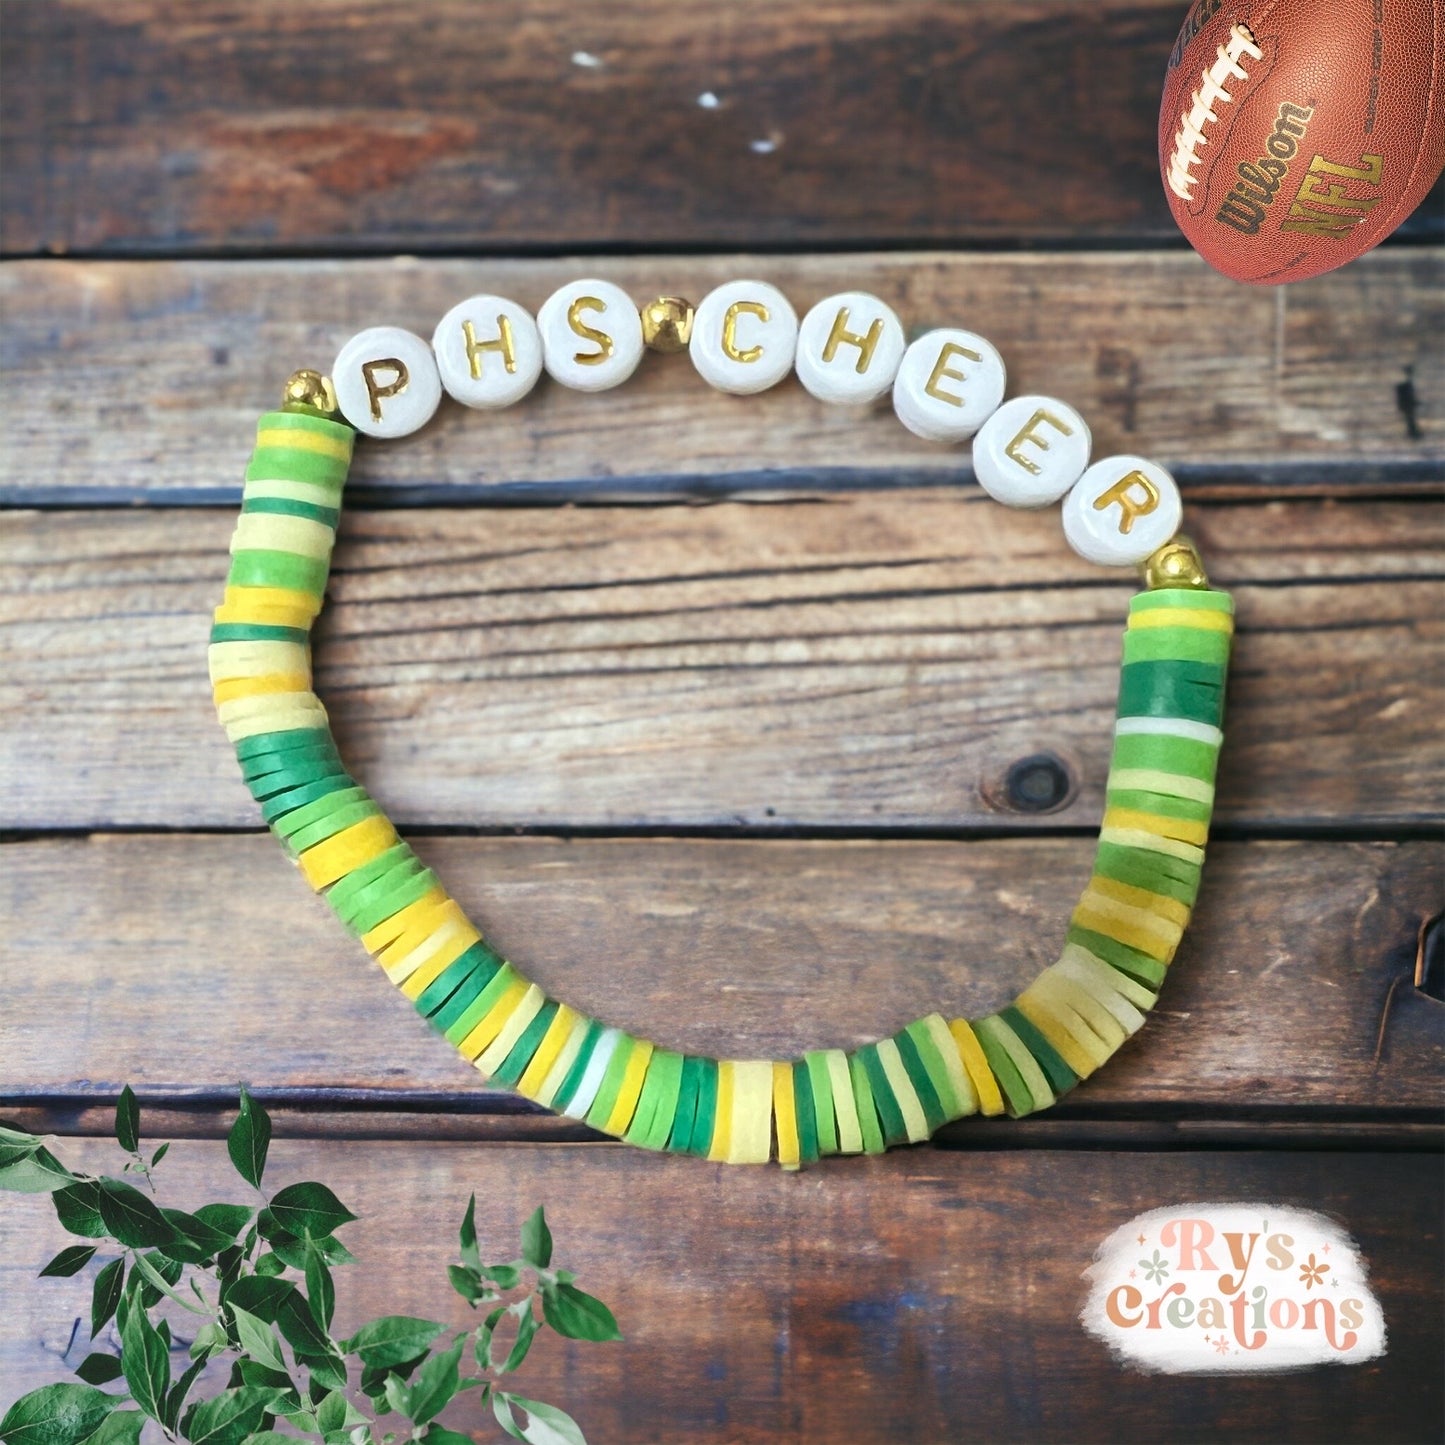 Green & Yellow PHS Cheer Bobcats Bracelet